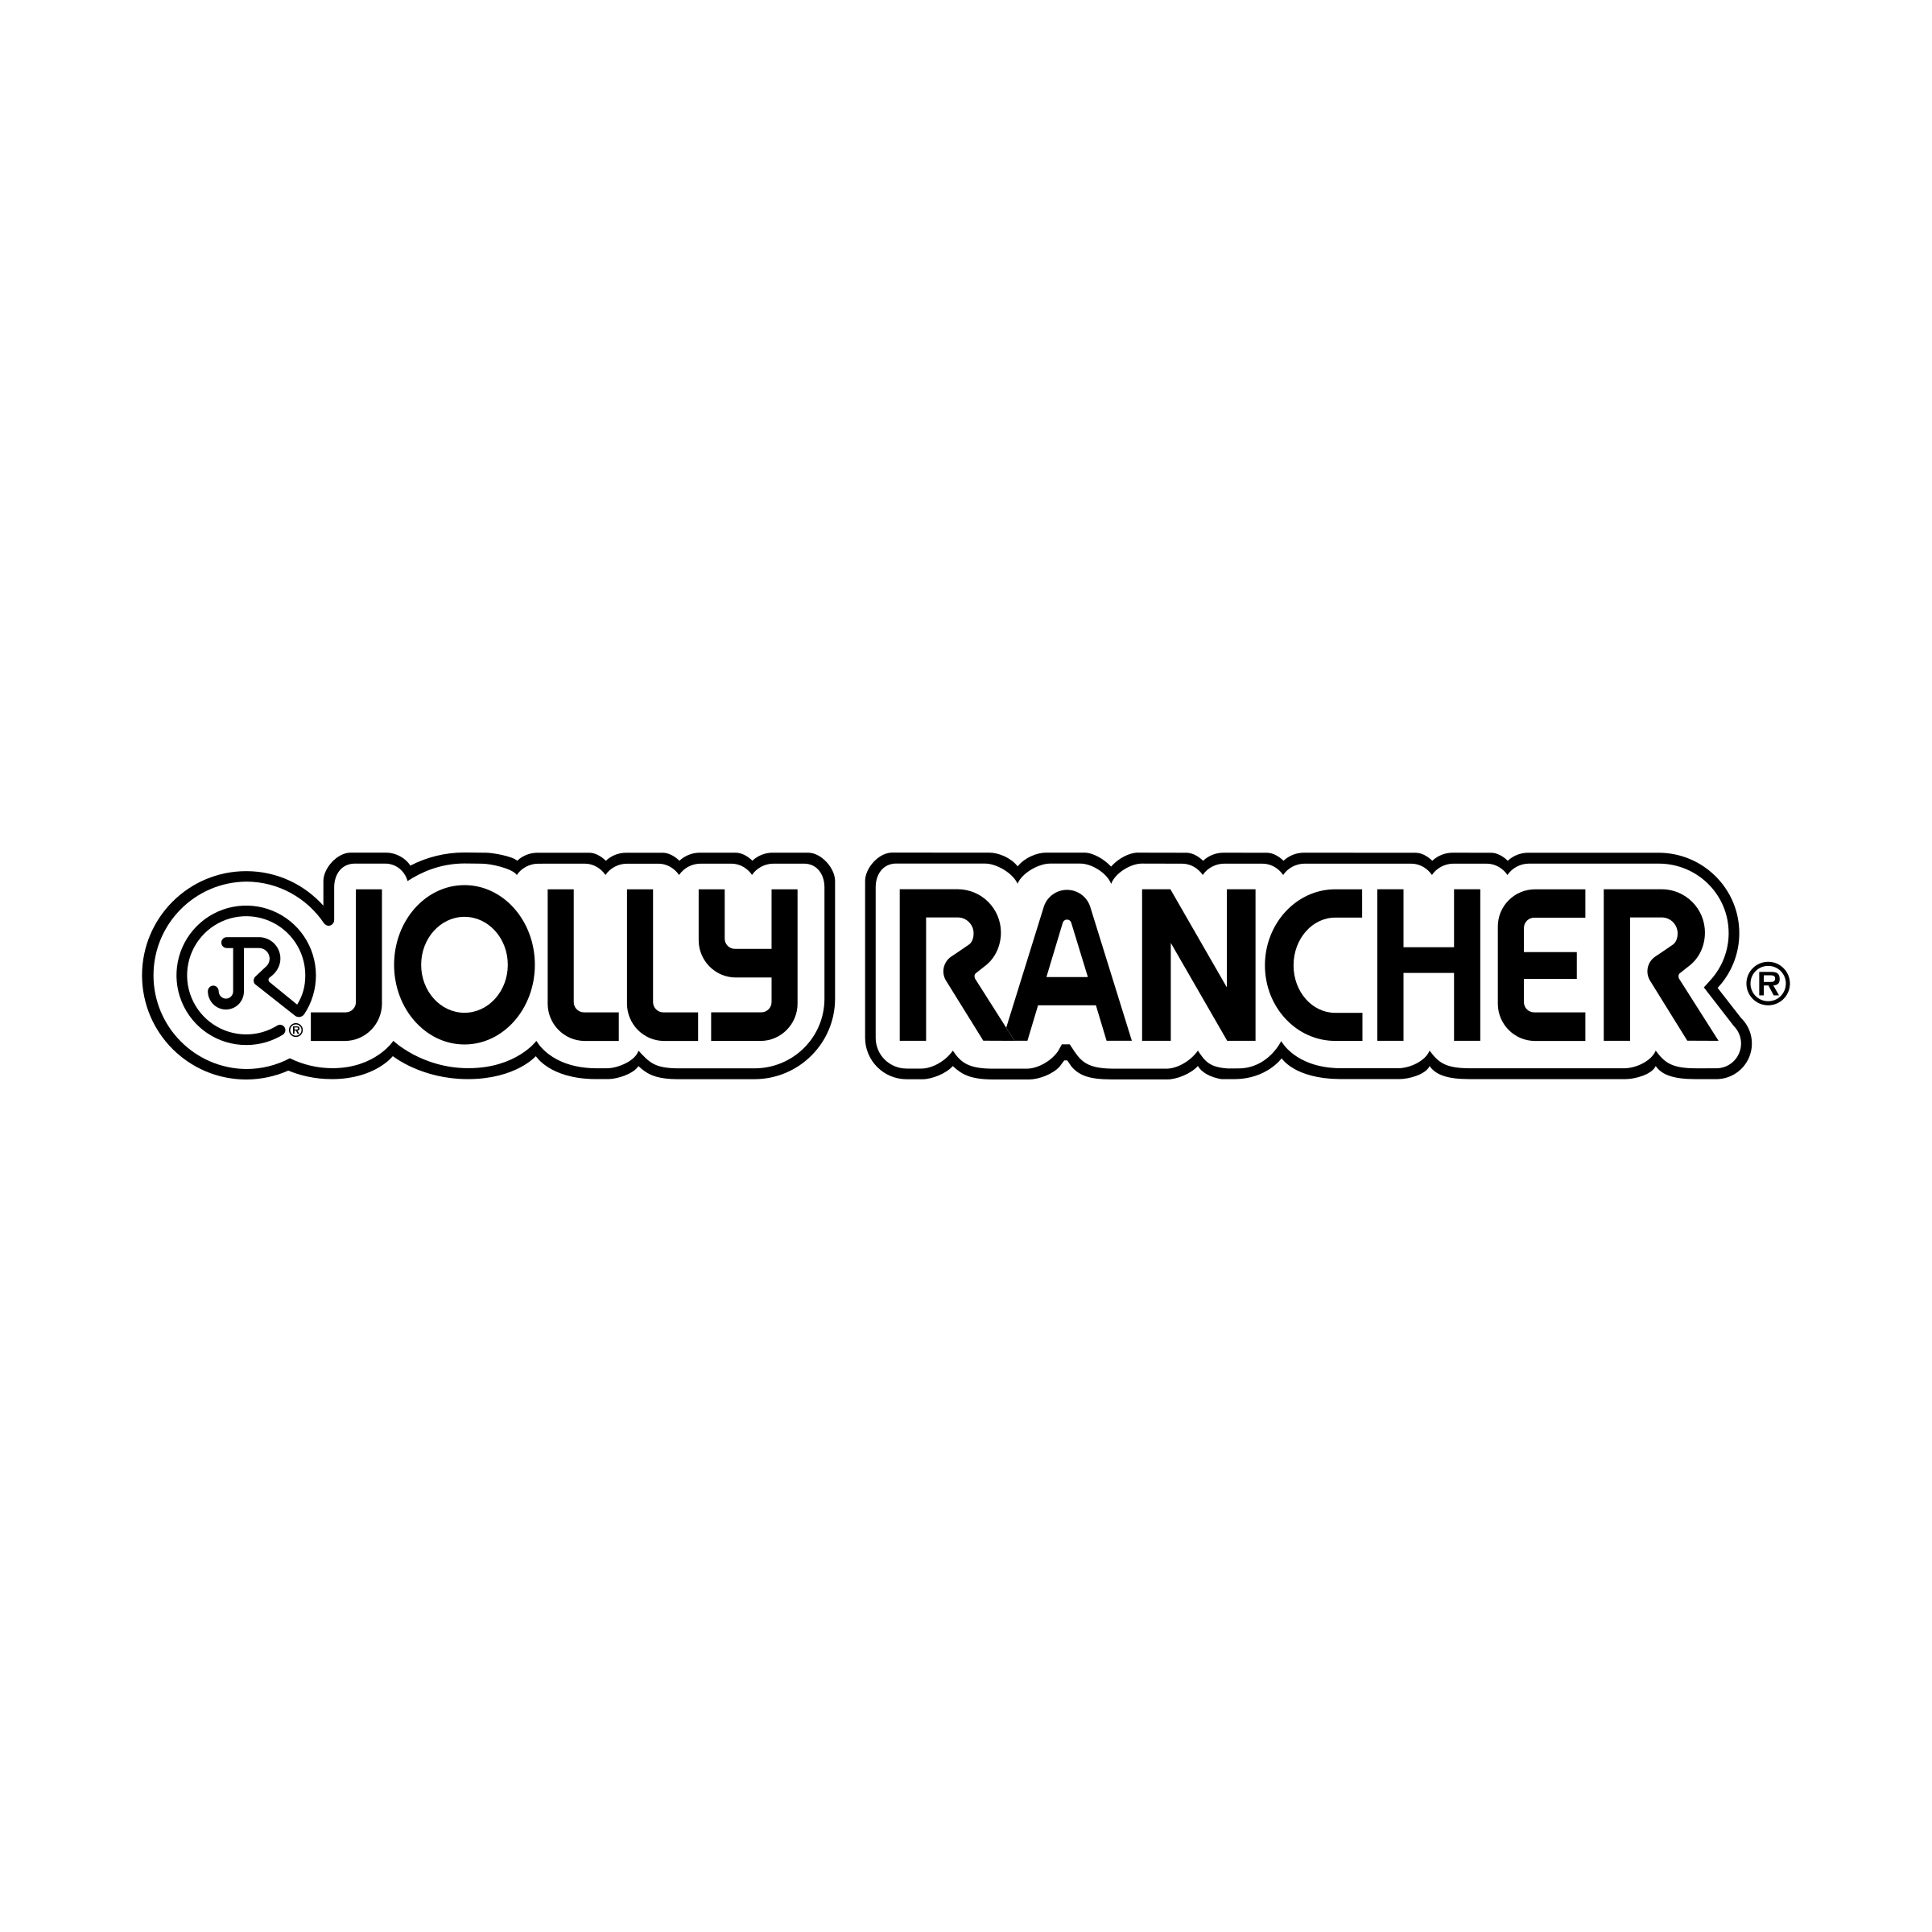 Rancher Logo - Jolly Rancher Logo PNG Transparent & SVG Vector - Freebie Supply